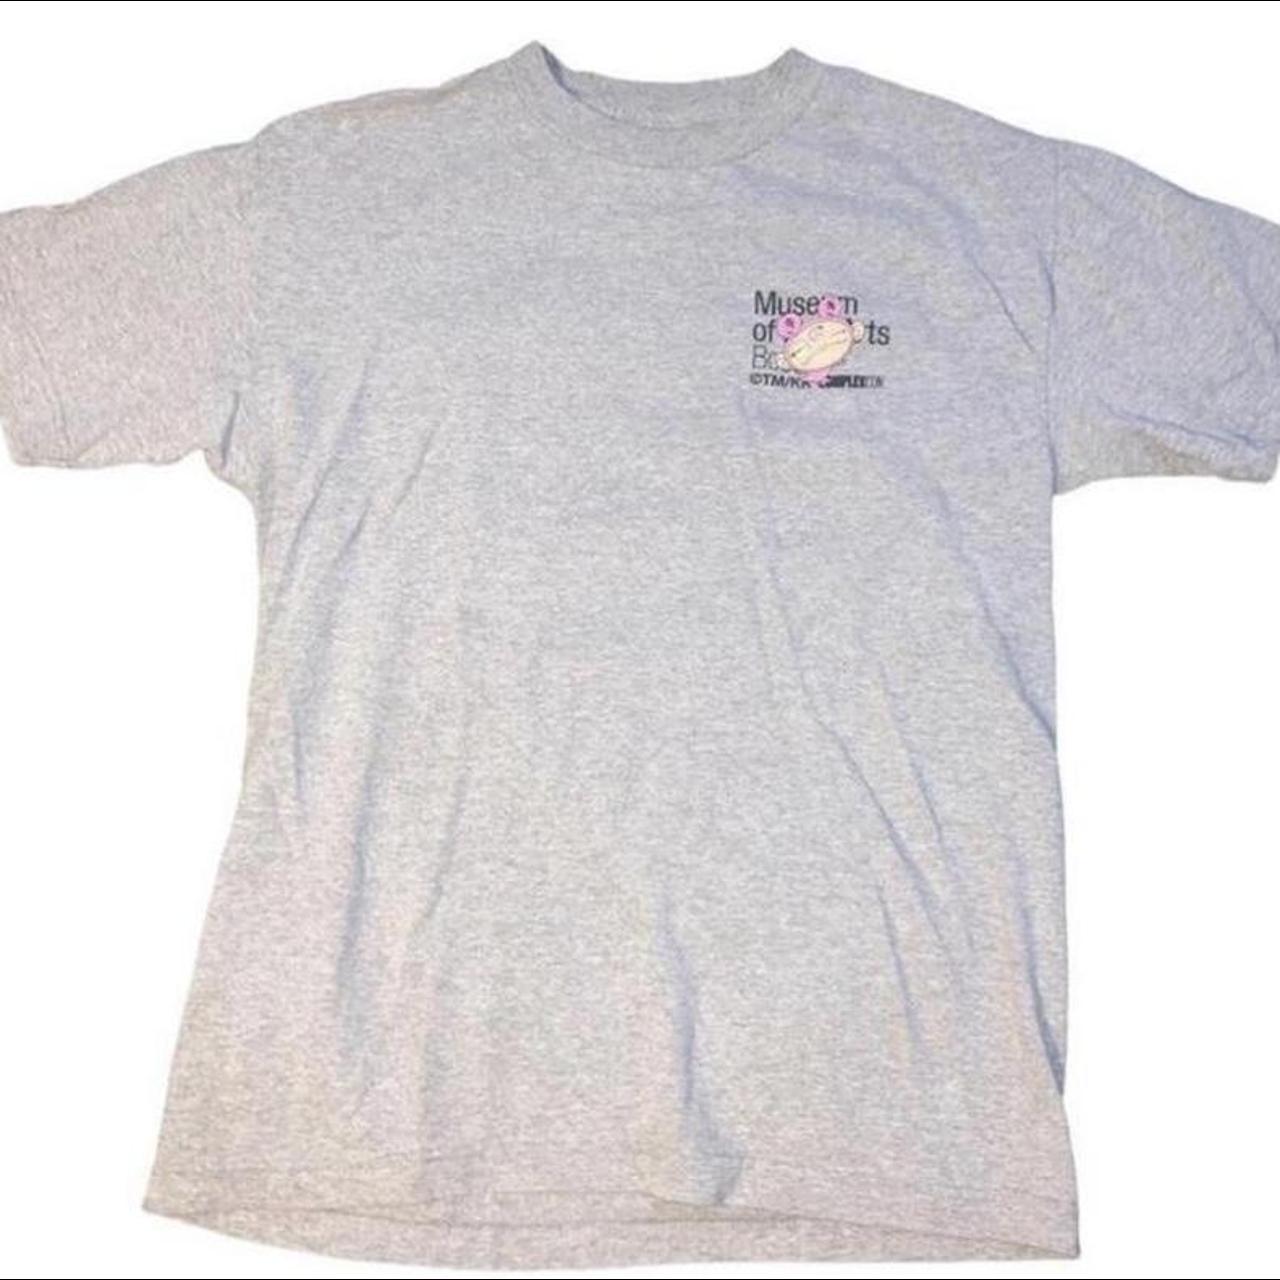 Takashi Murakami T-Shirts, Items Sell Out at MFA in Boston – WWD